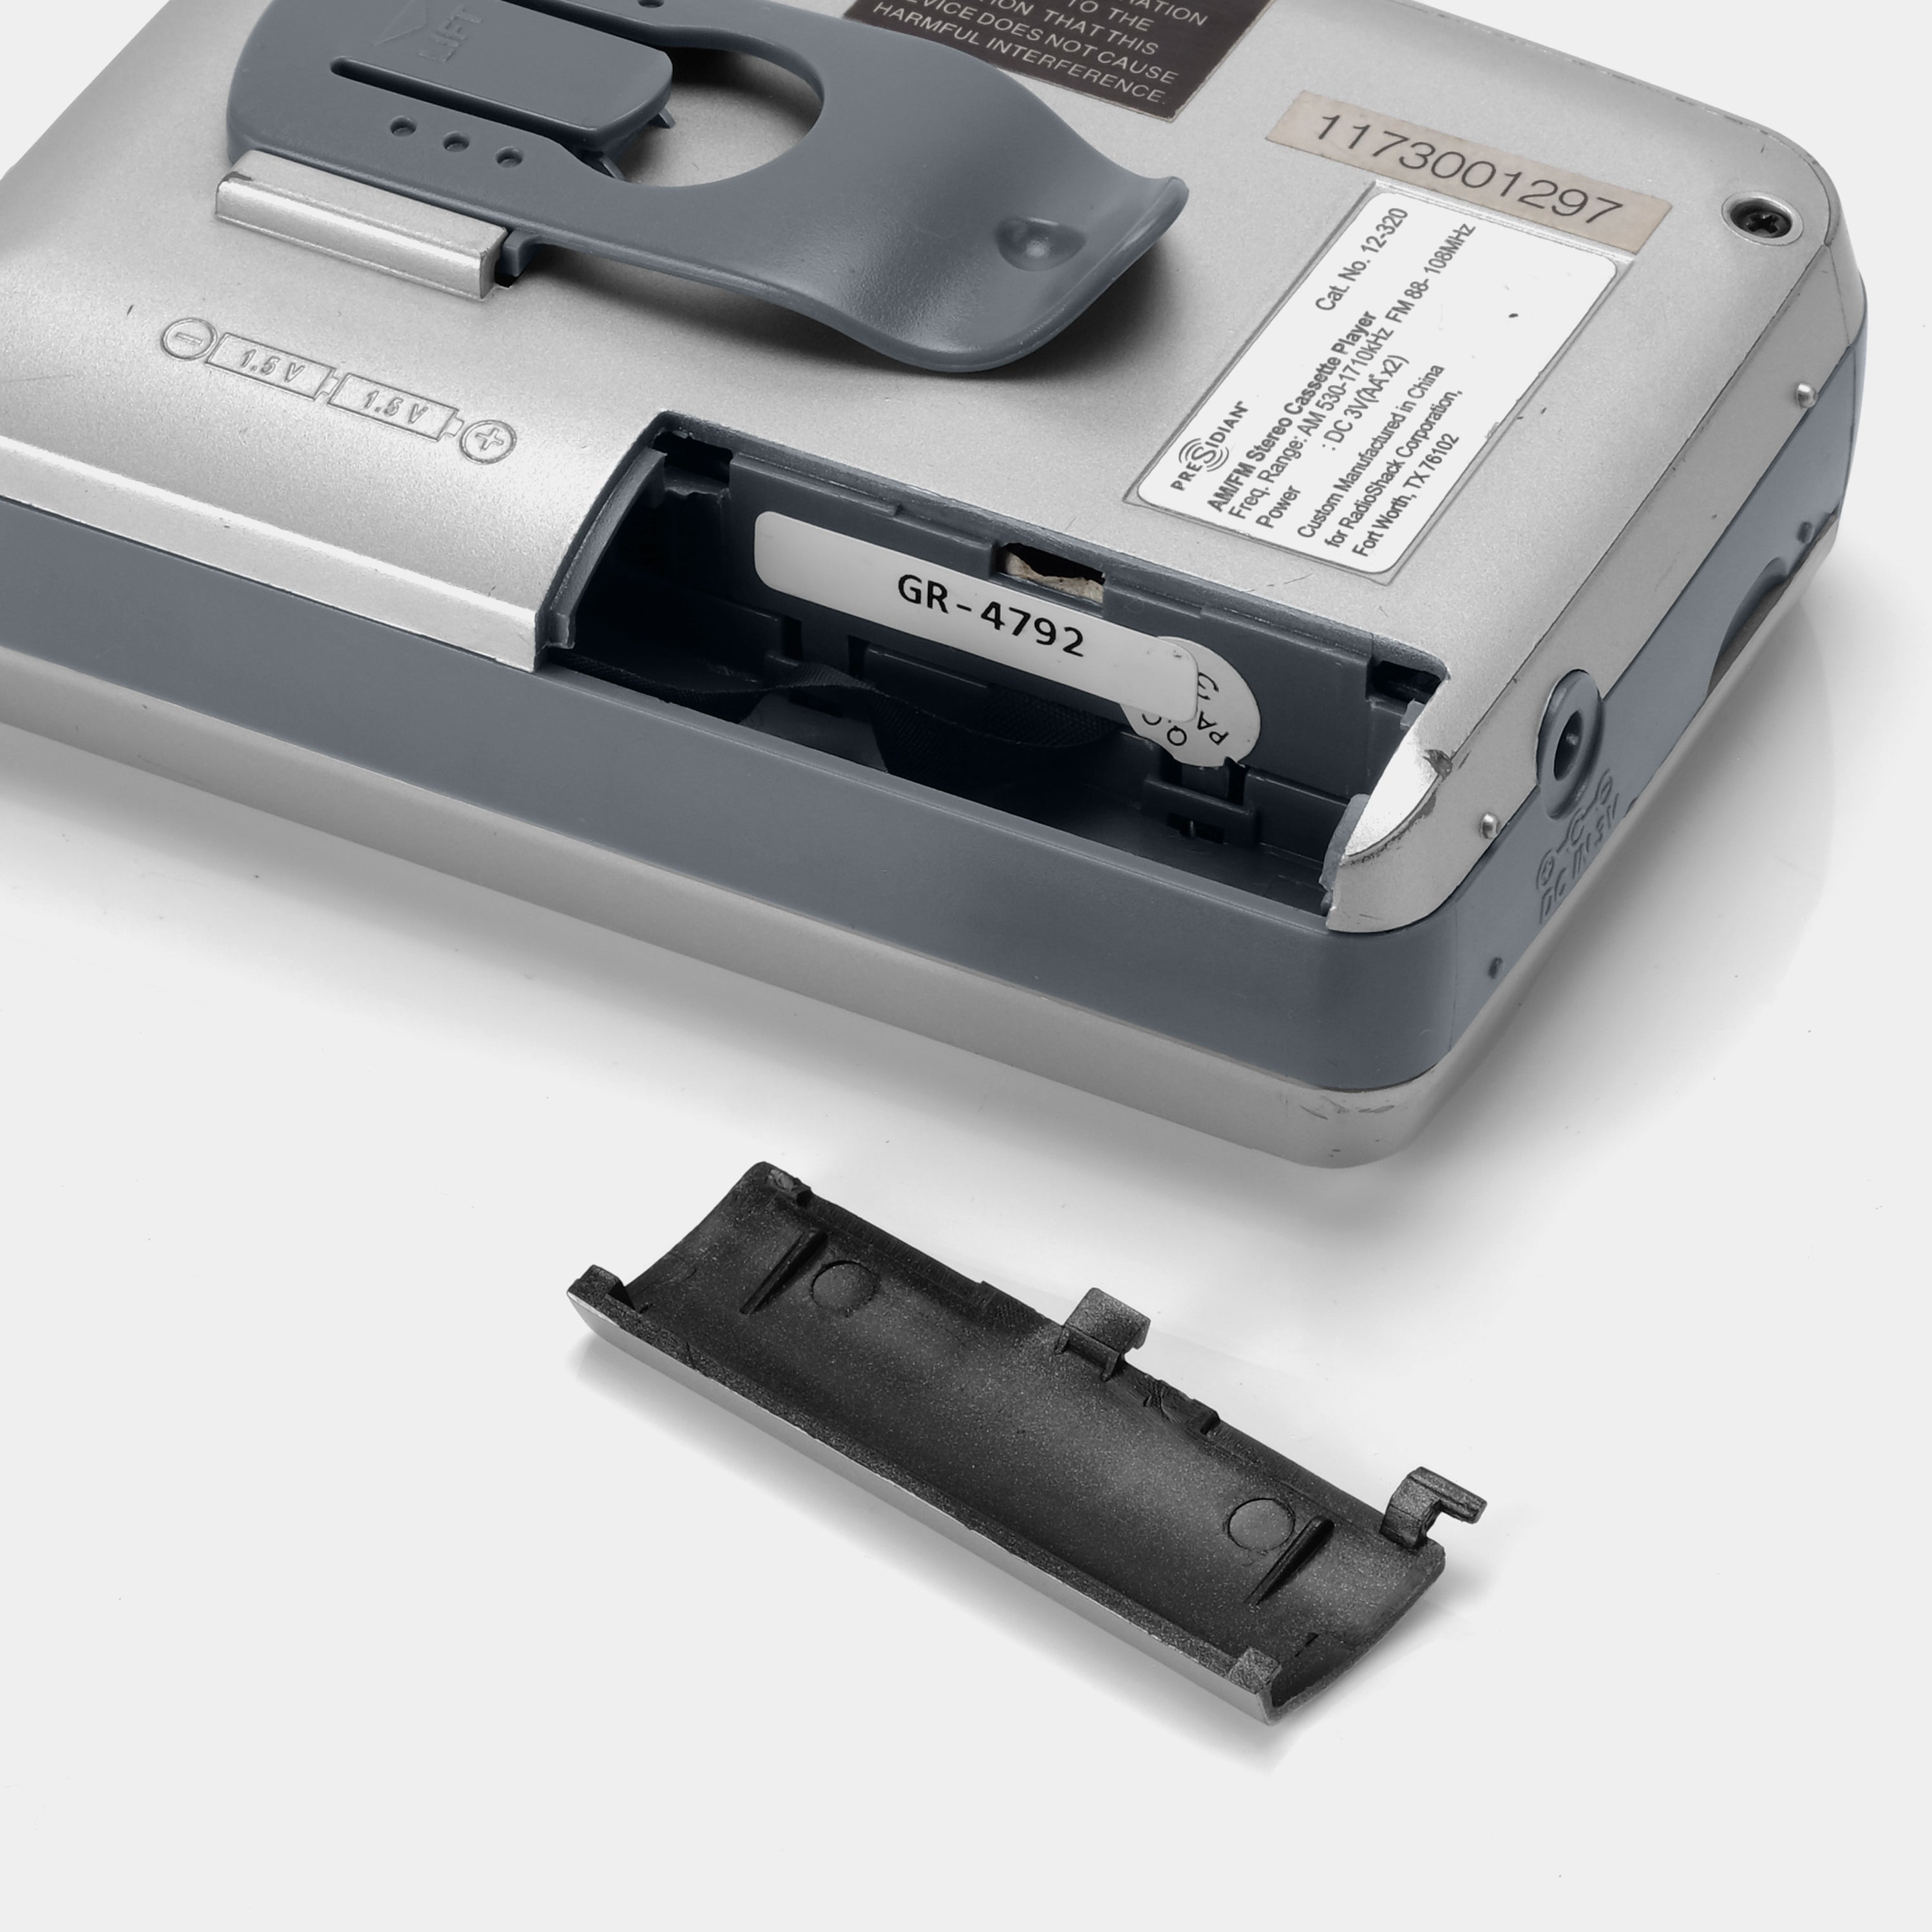 Sony Walkman WM-FX193 Portable Cassette Player Refurbished by Retrospekt